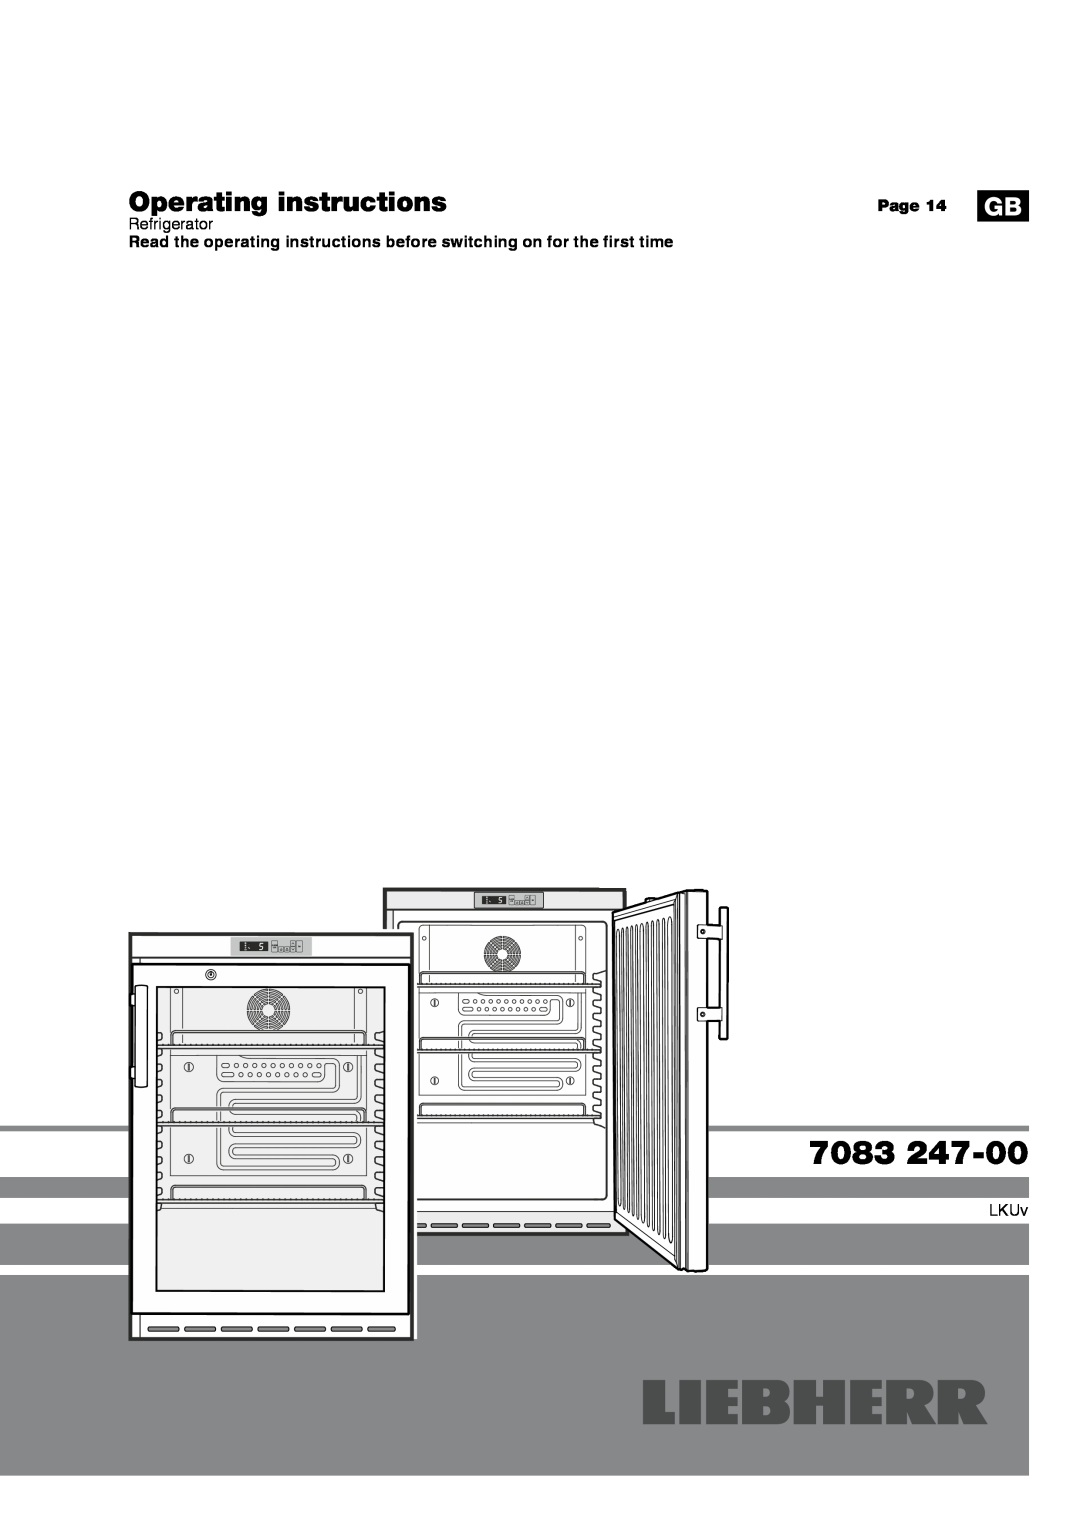 Liebherr 7083 247-00 operating instructions Operating instructions, Page, Refrigerator, LKUv 